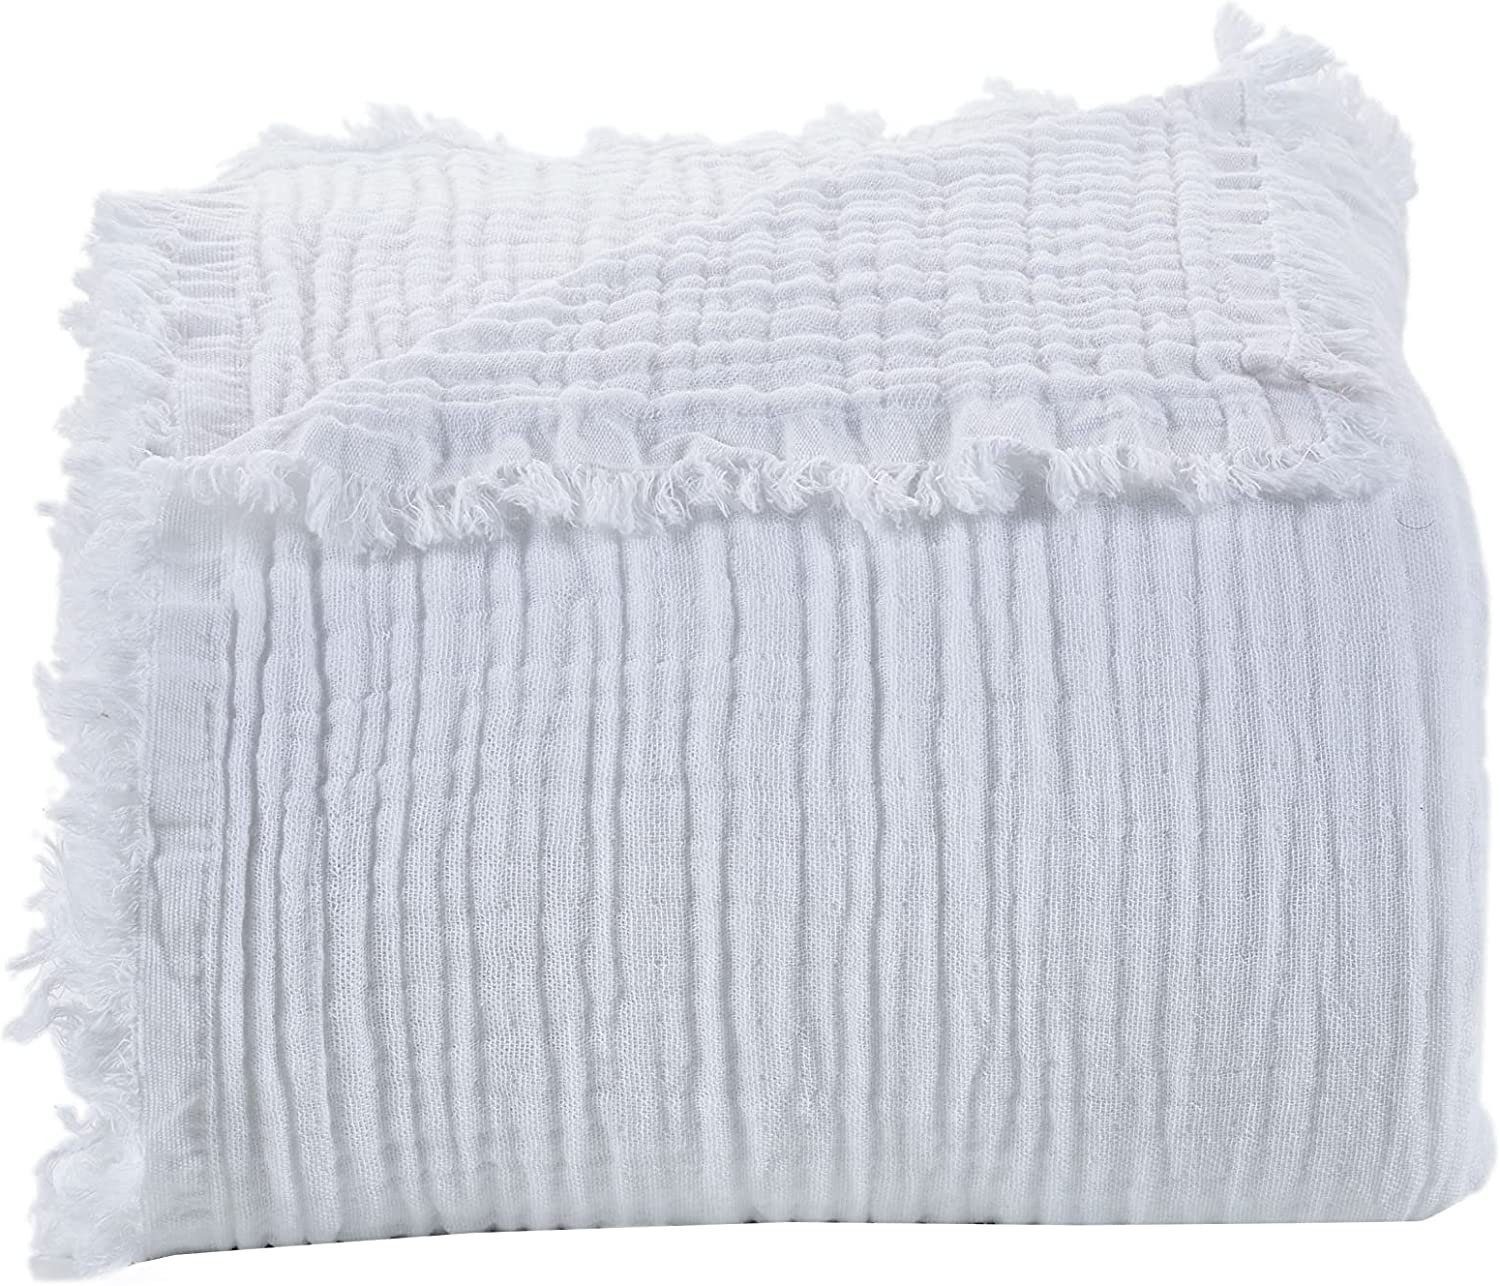 Tagesdecke BOHORIA® Premium Pearl Musselin 200x250cm, „Pure“ Baumwolle, Tagesdecke 100% BOHORIA